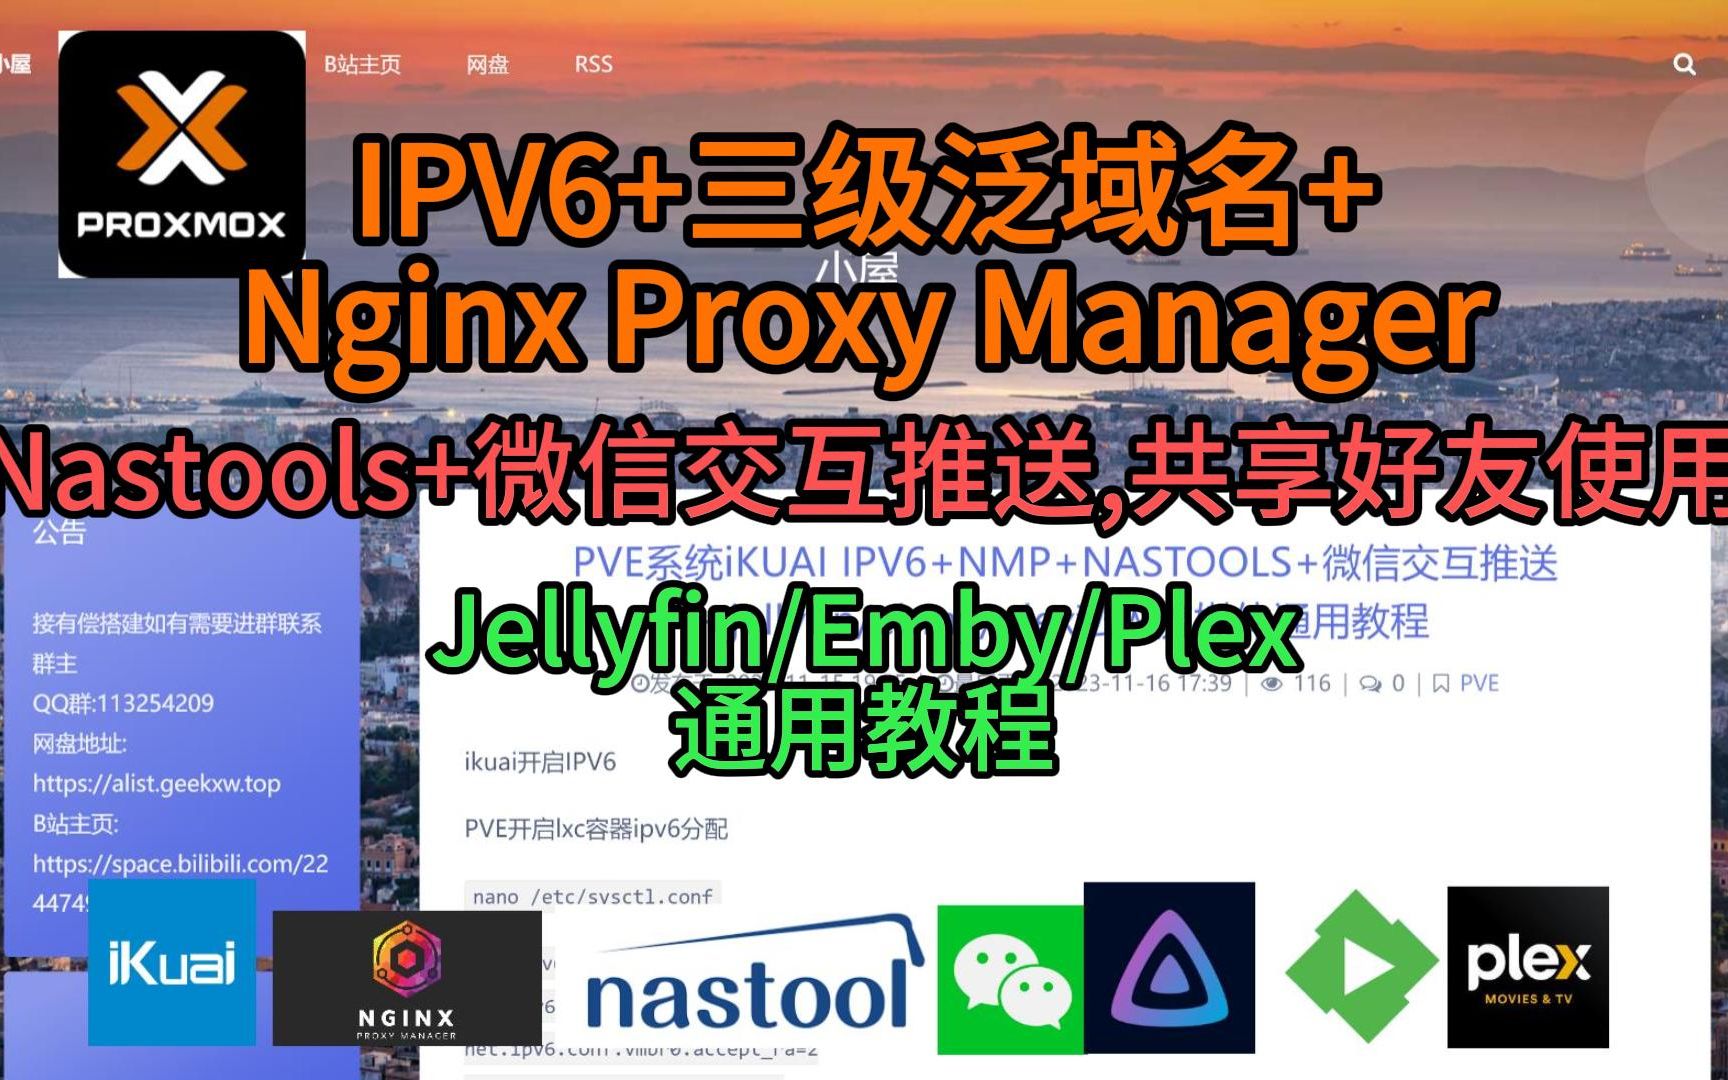 PVE系统iKUAI IPV6+NMP+NASTOOLS+微信交互推送+jellyfin/ebmy/plex私人流媒体通用教程-小陈折腾日记